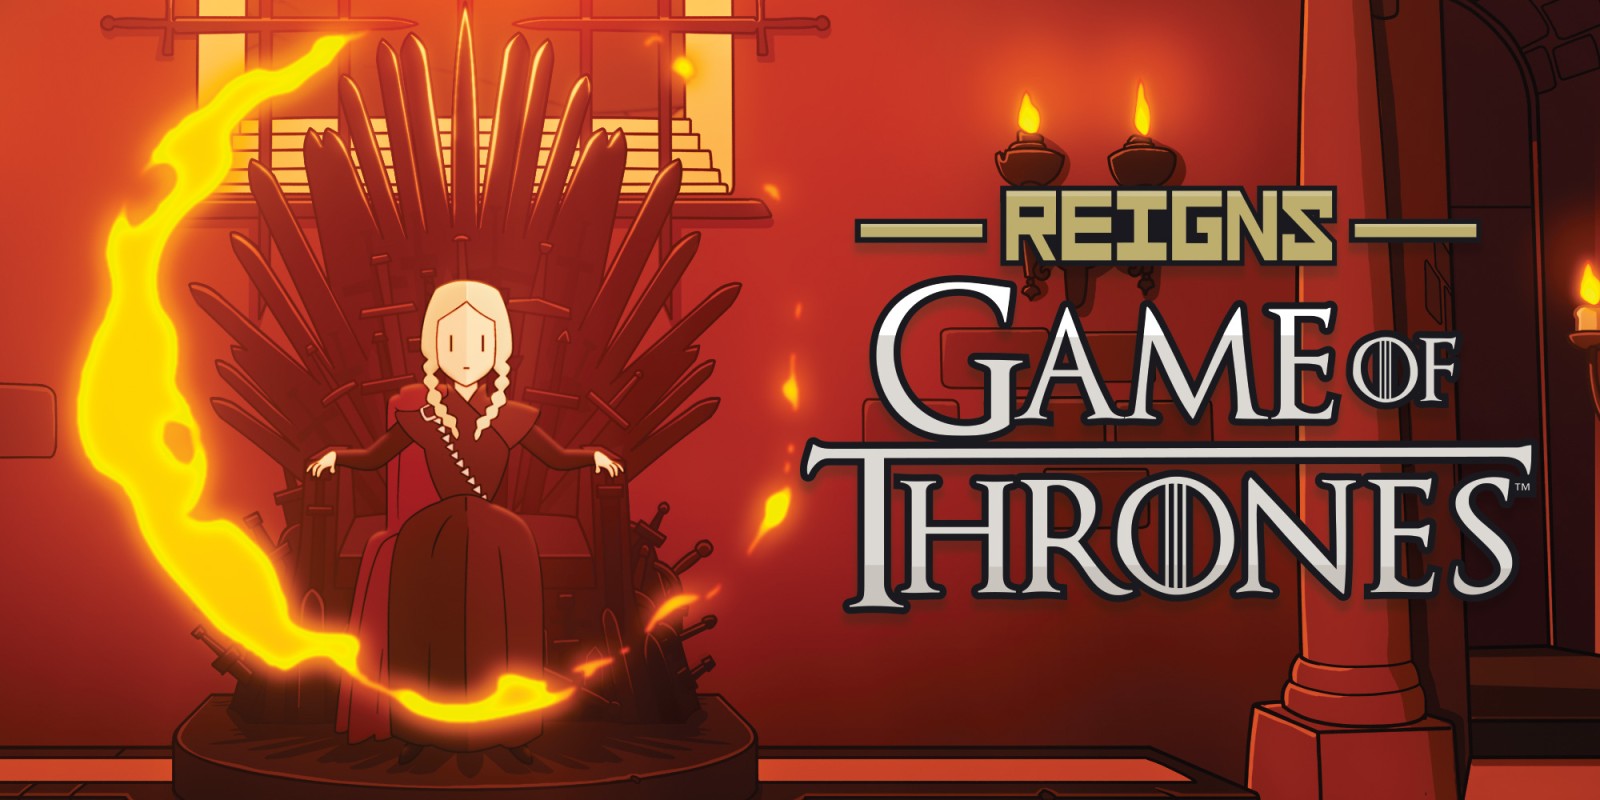 game of thrones a telltale games series dlc